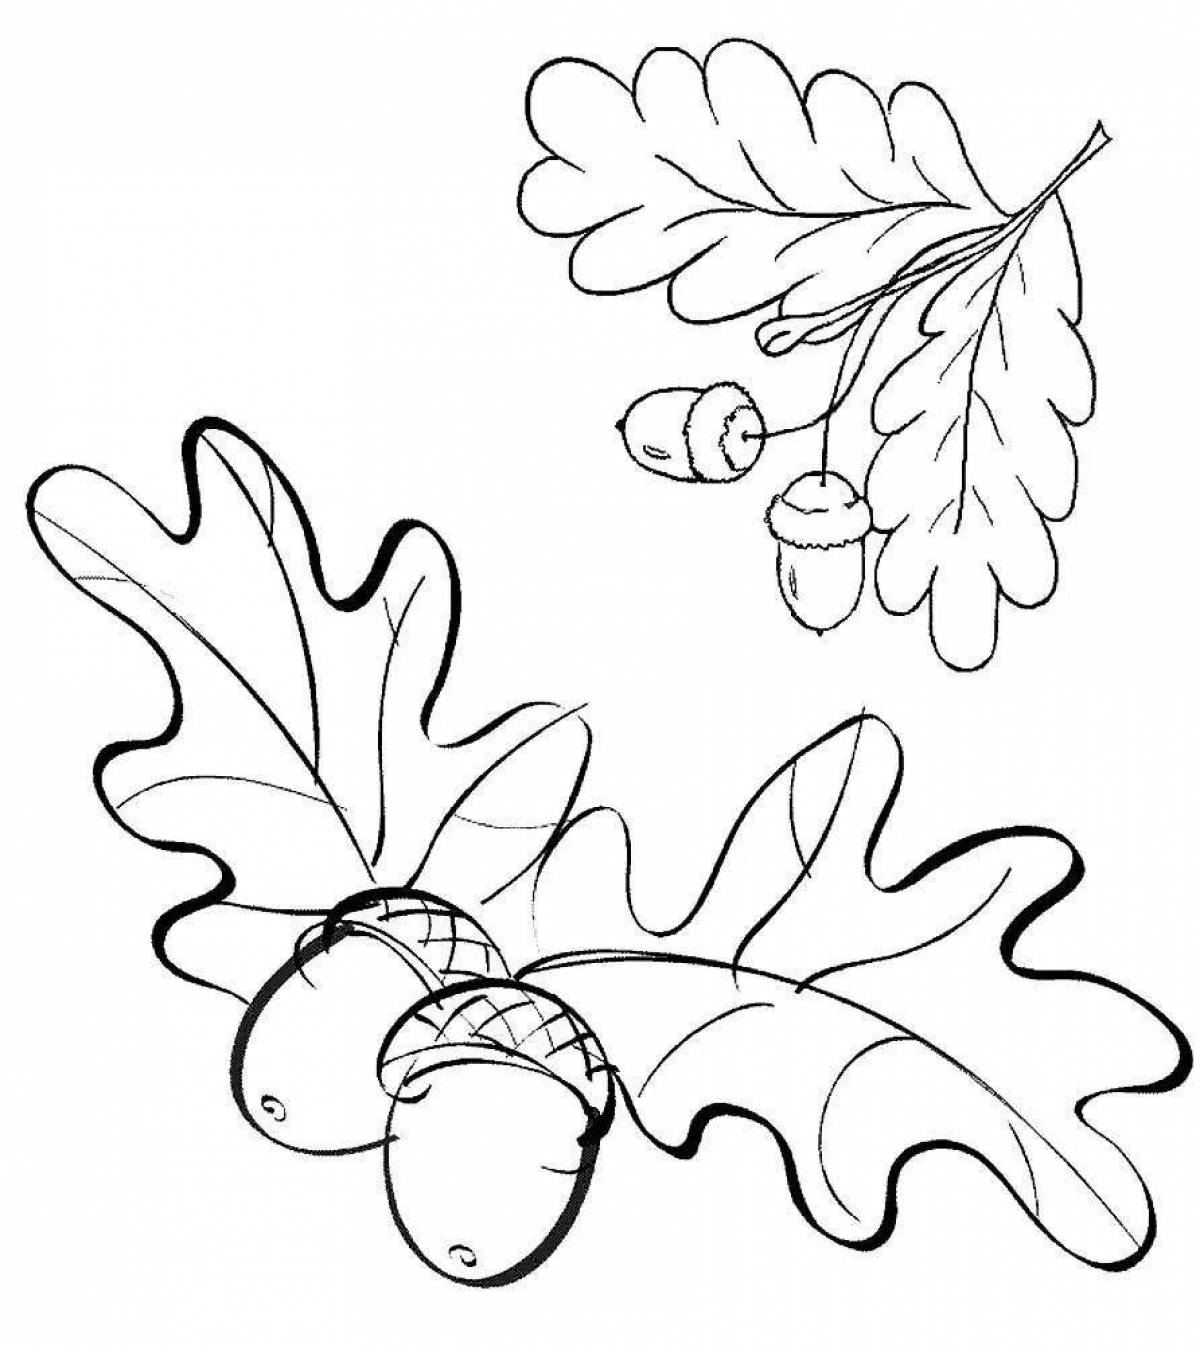 Festive acorn coloring page